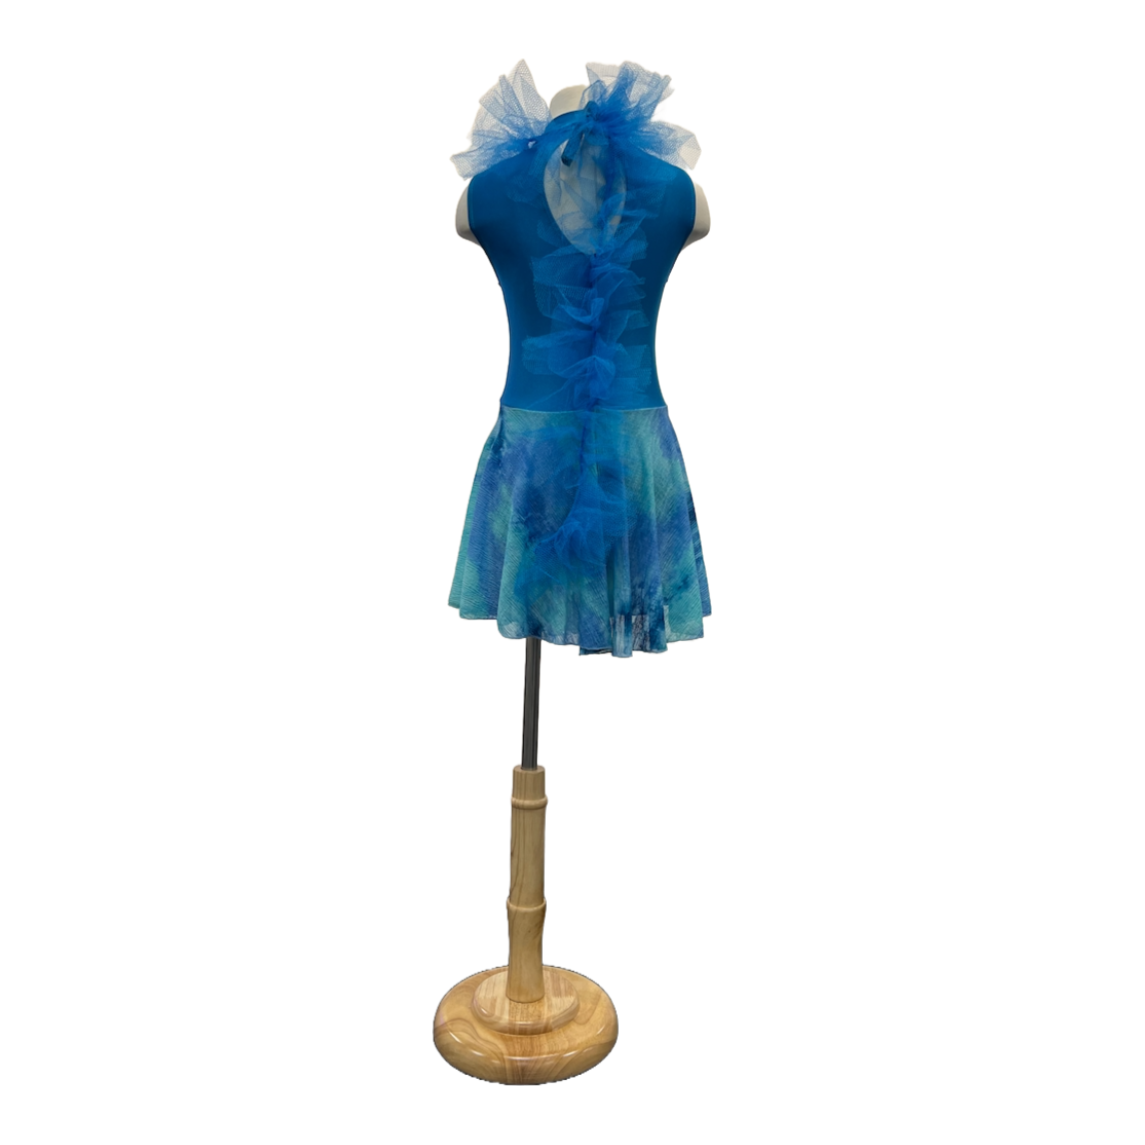 Blue Ocean Dress Costume